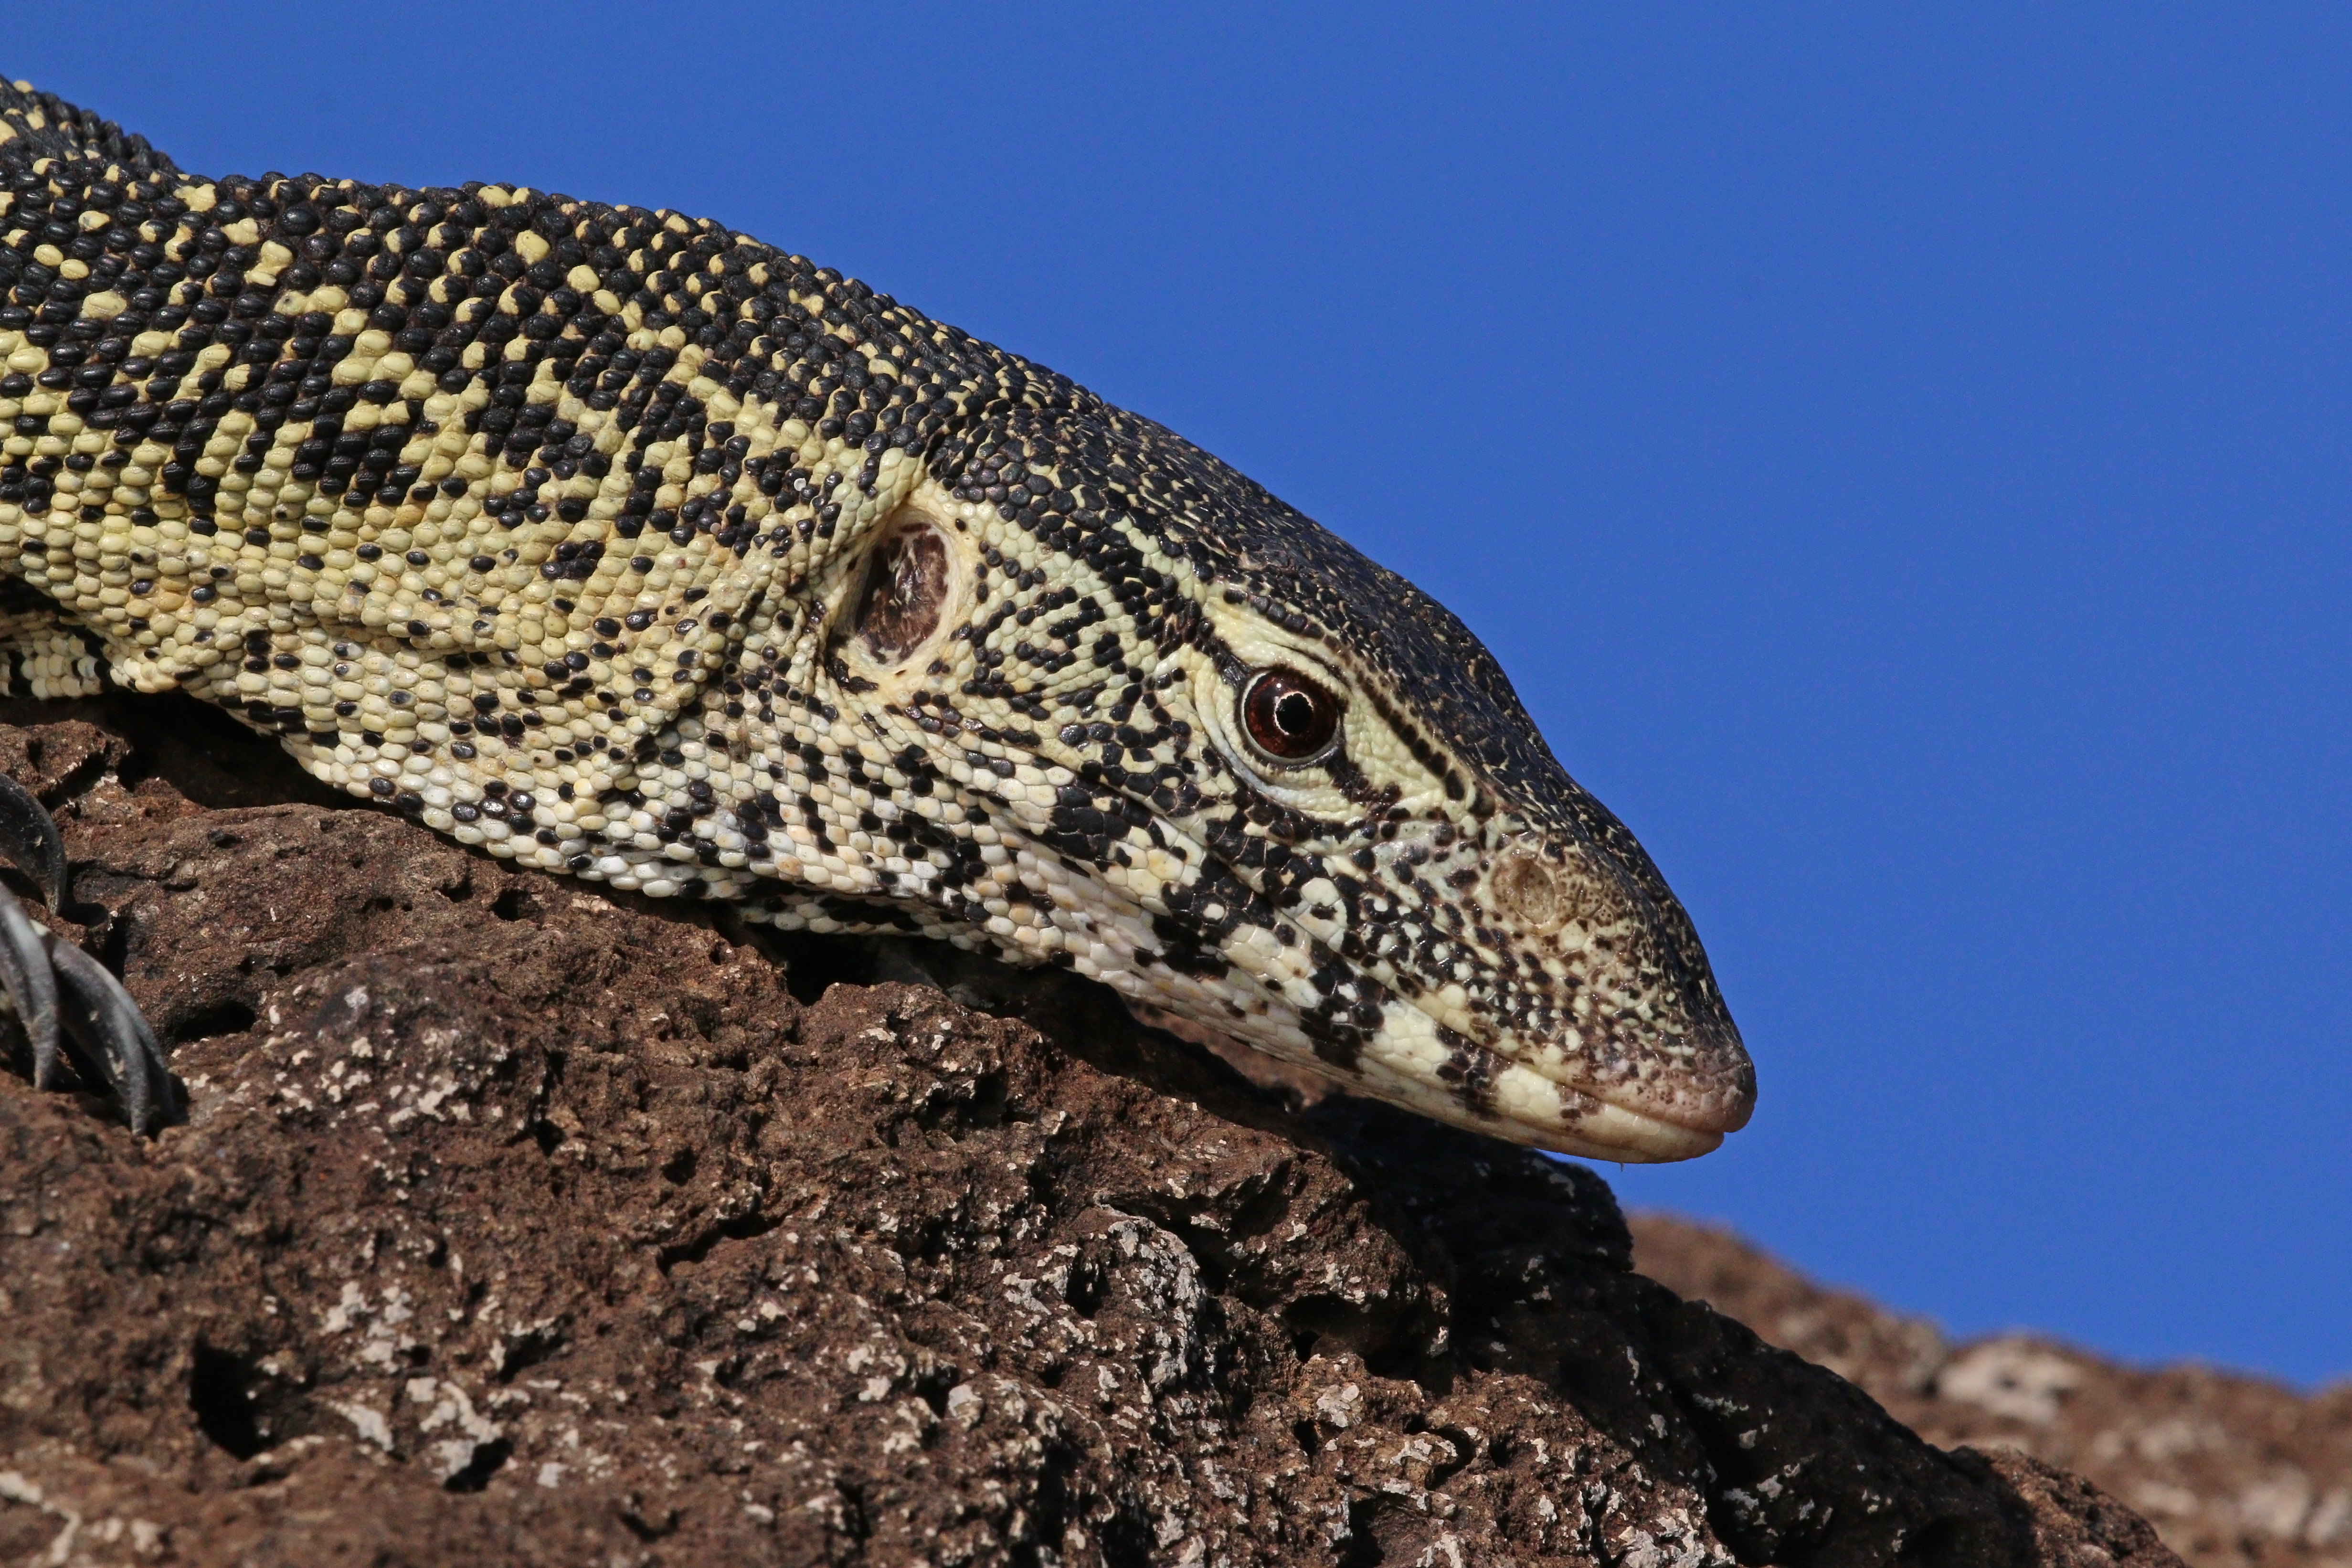 Nile monitor lizard (Varanus niloticus) head